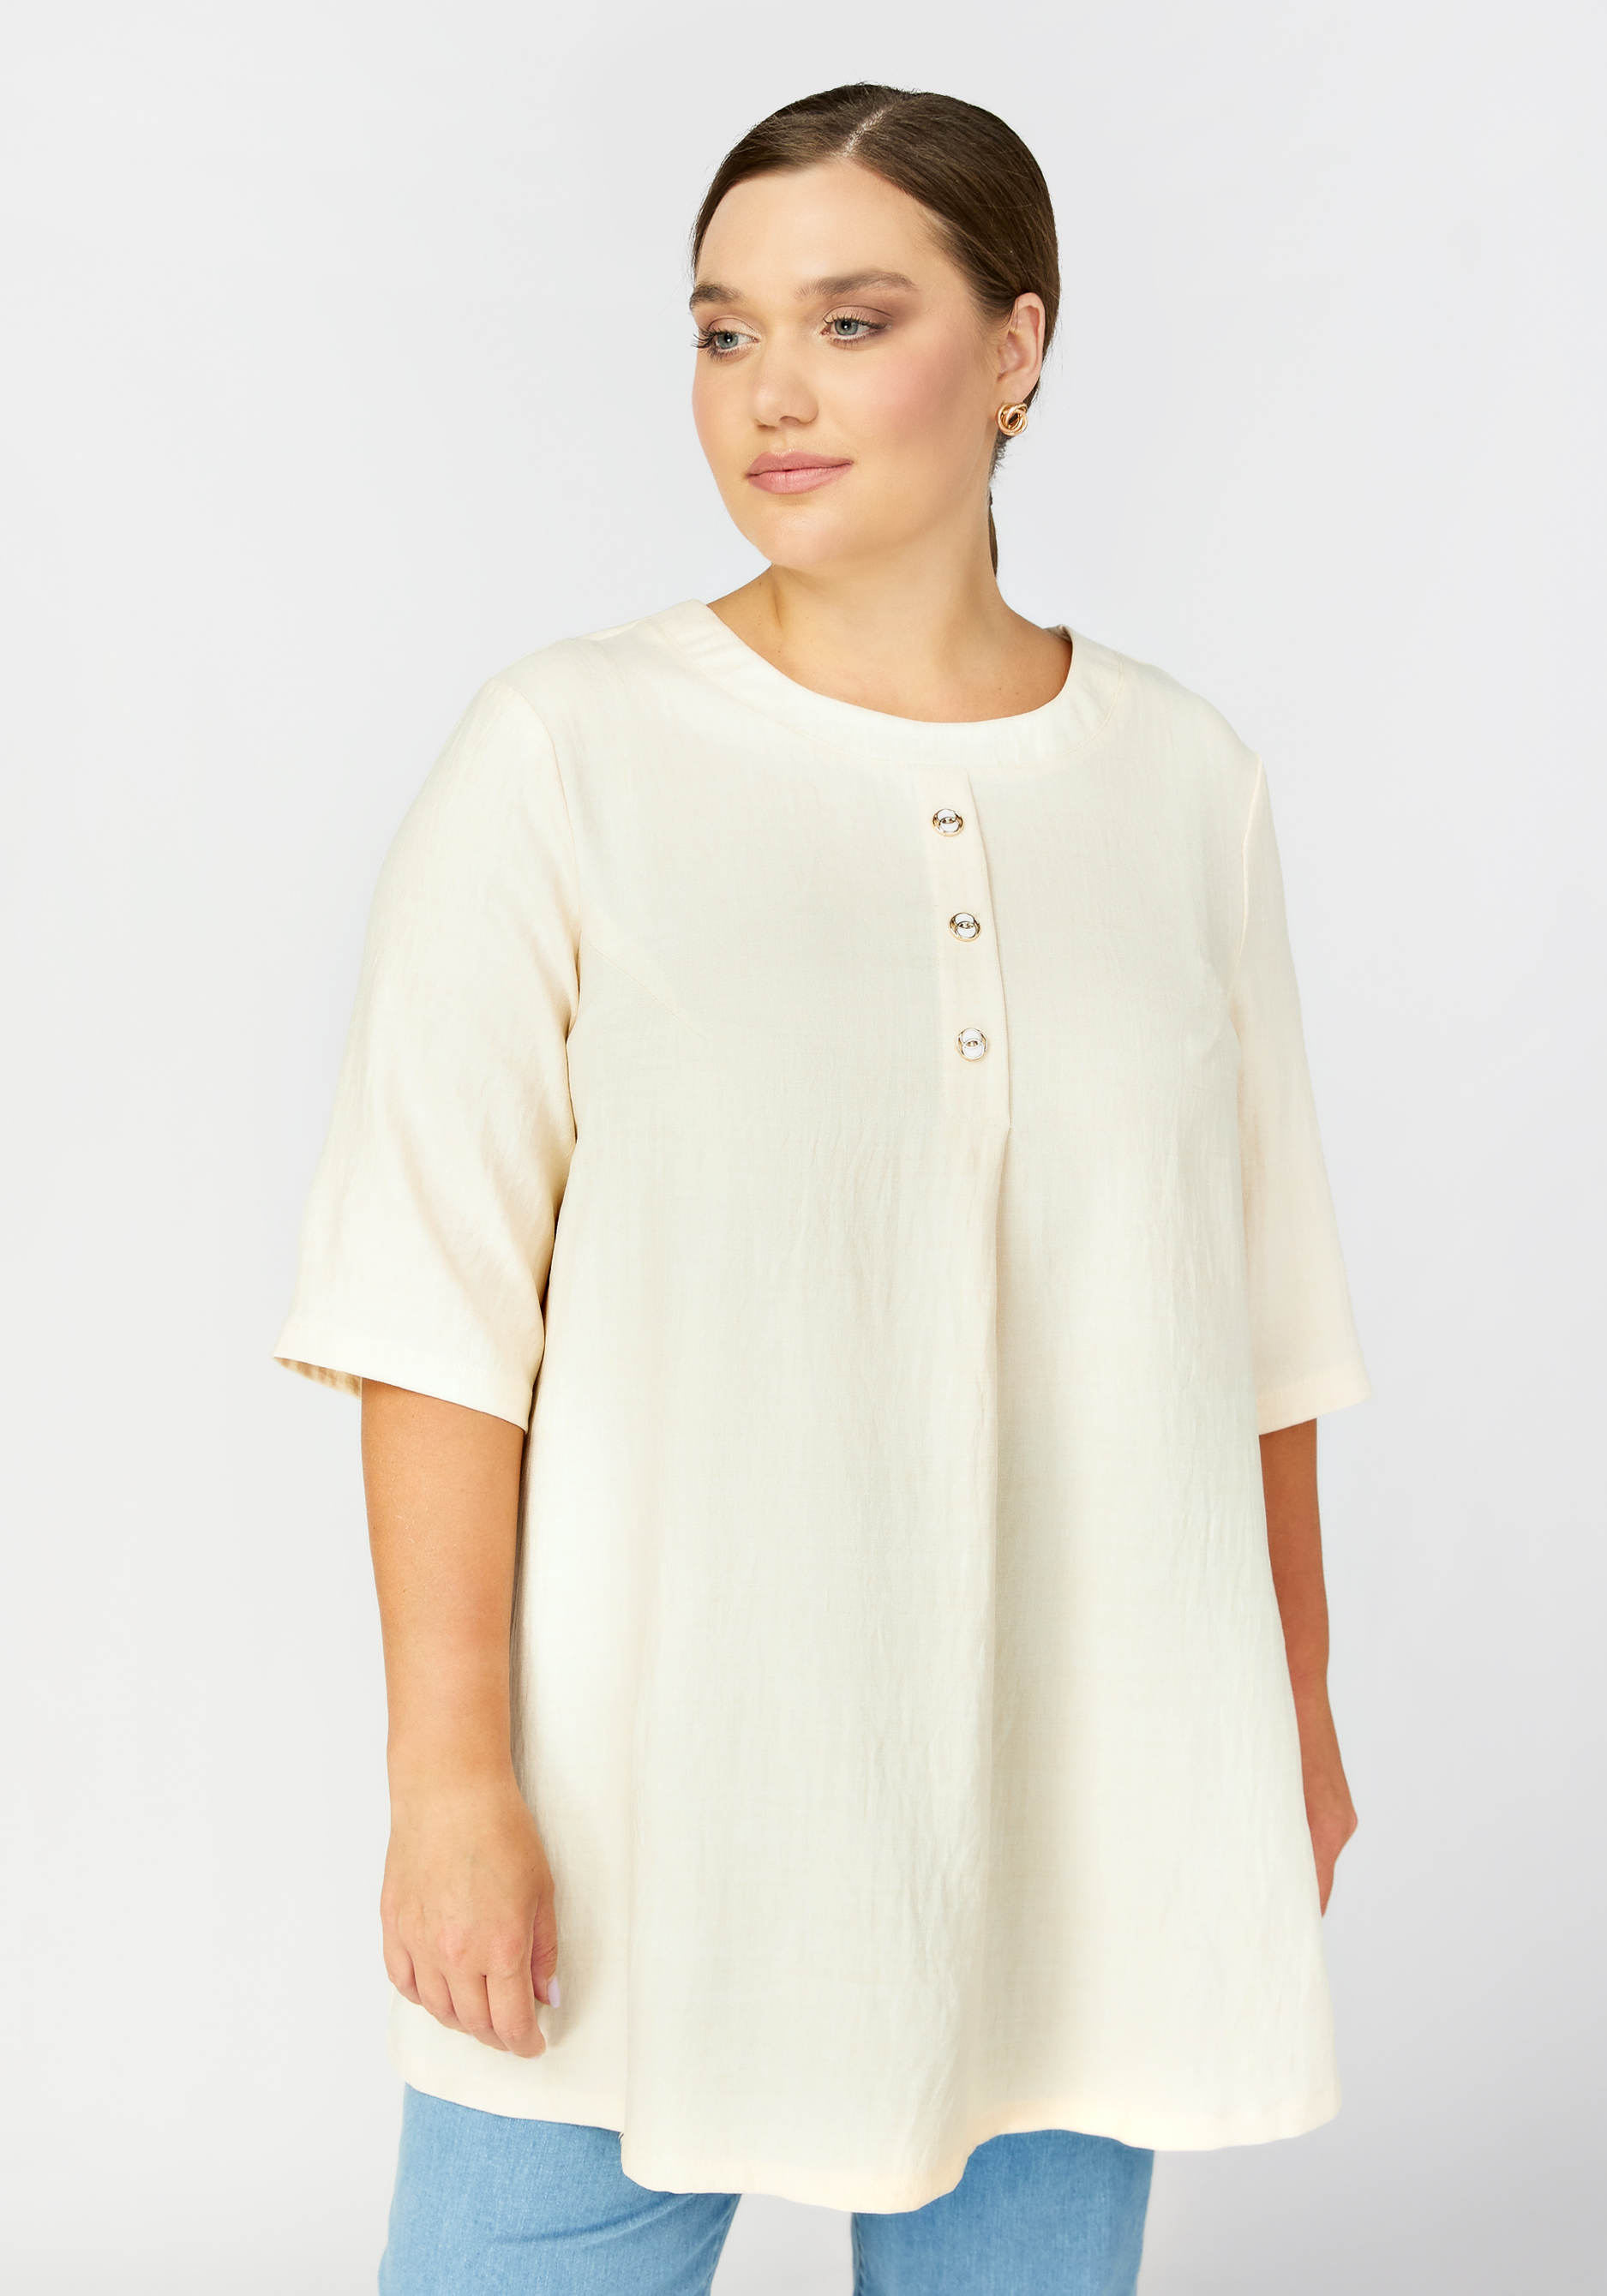 Блуза с планкой на пуговицах жен блуза силви белый р 50